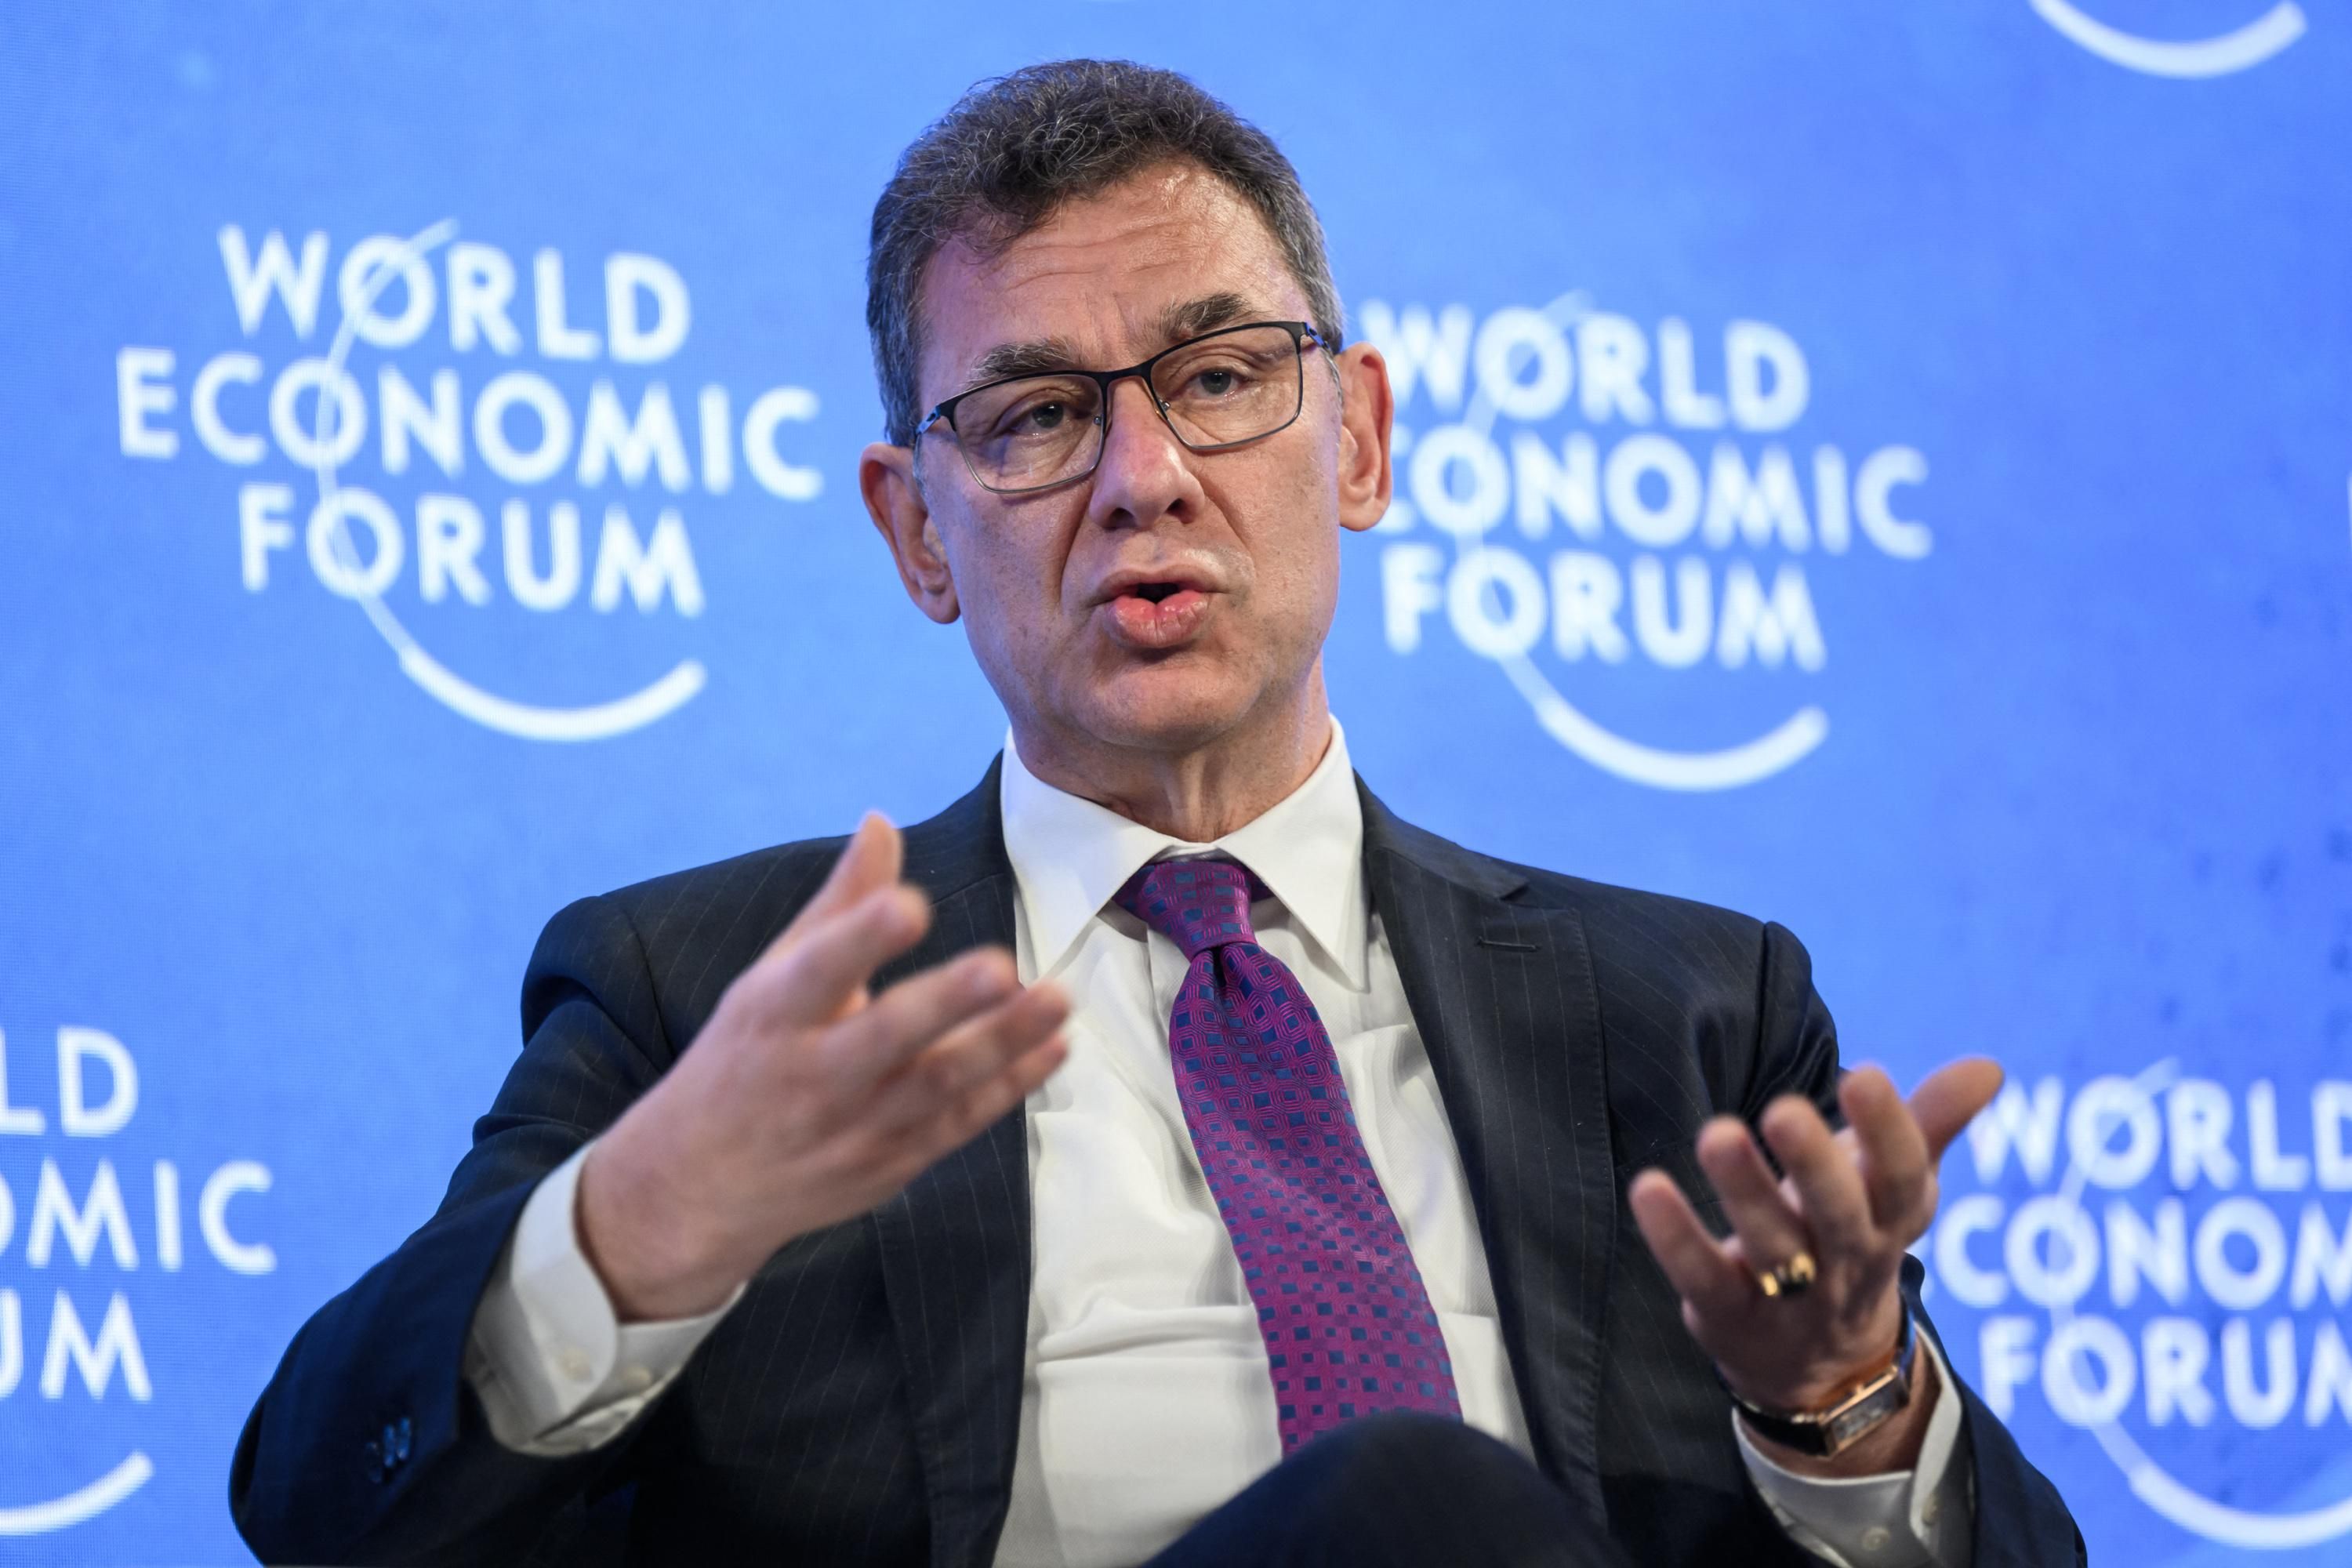 Pfizer CEO speaks at the World Economic Forum